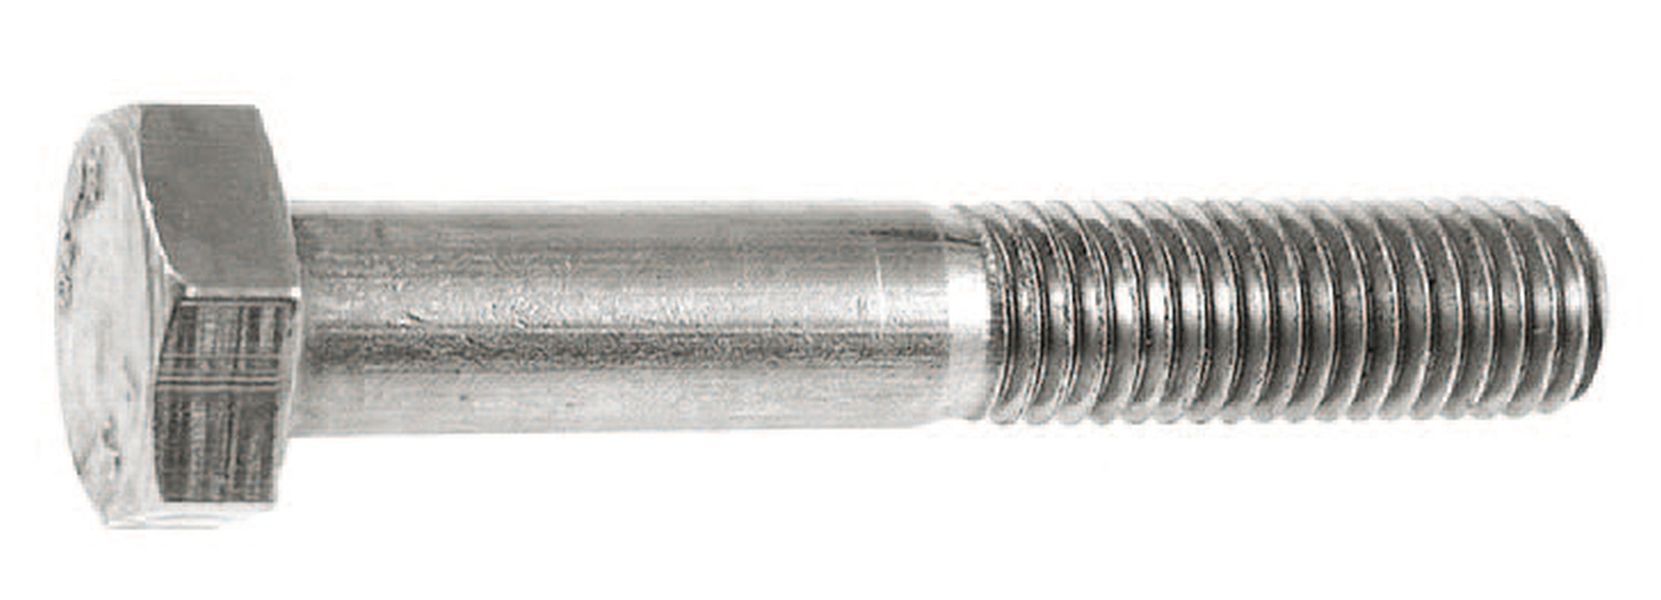 Six core screws - M10 x 60 mm - 1 pc. - V4A - shaft